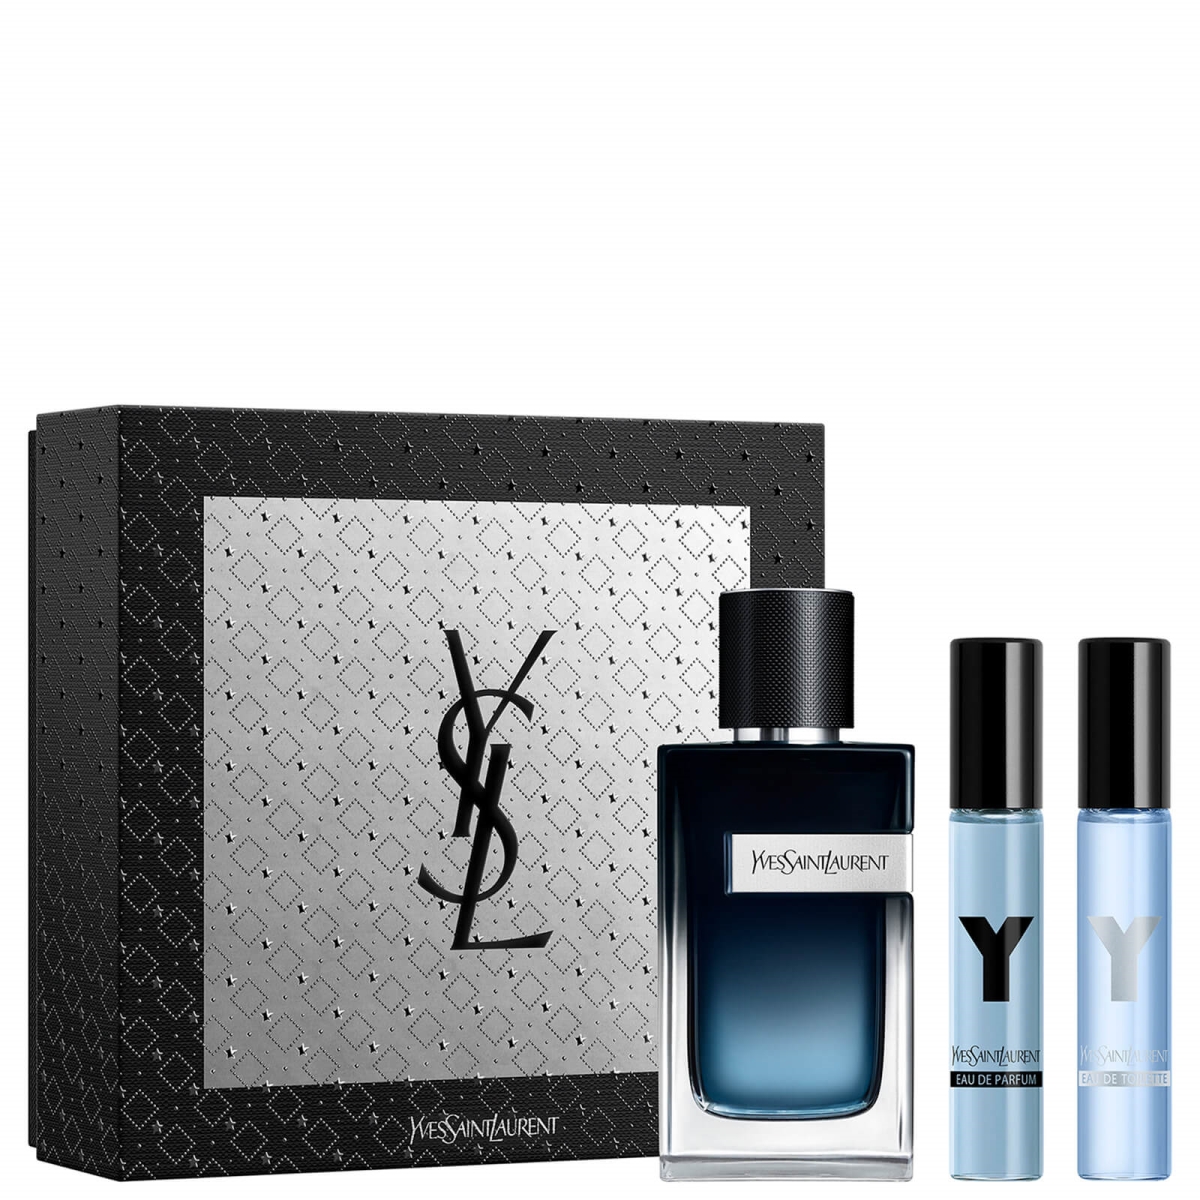 L'Oreal YSLLE1129 Yves Saint Laurent Y Gift Set Fragrances for Women - 3 Piece